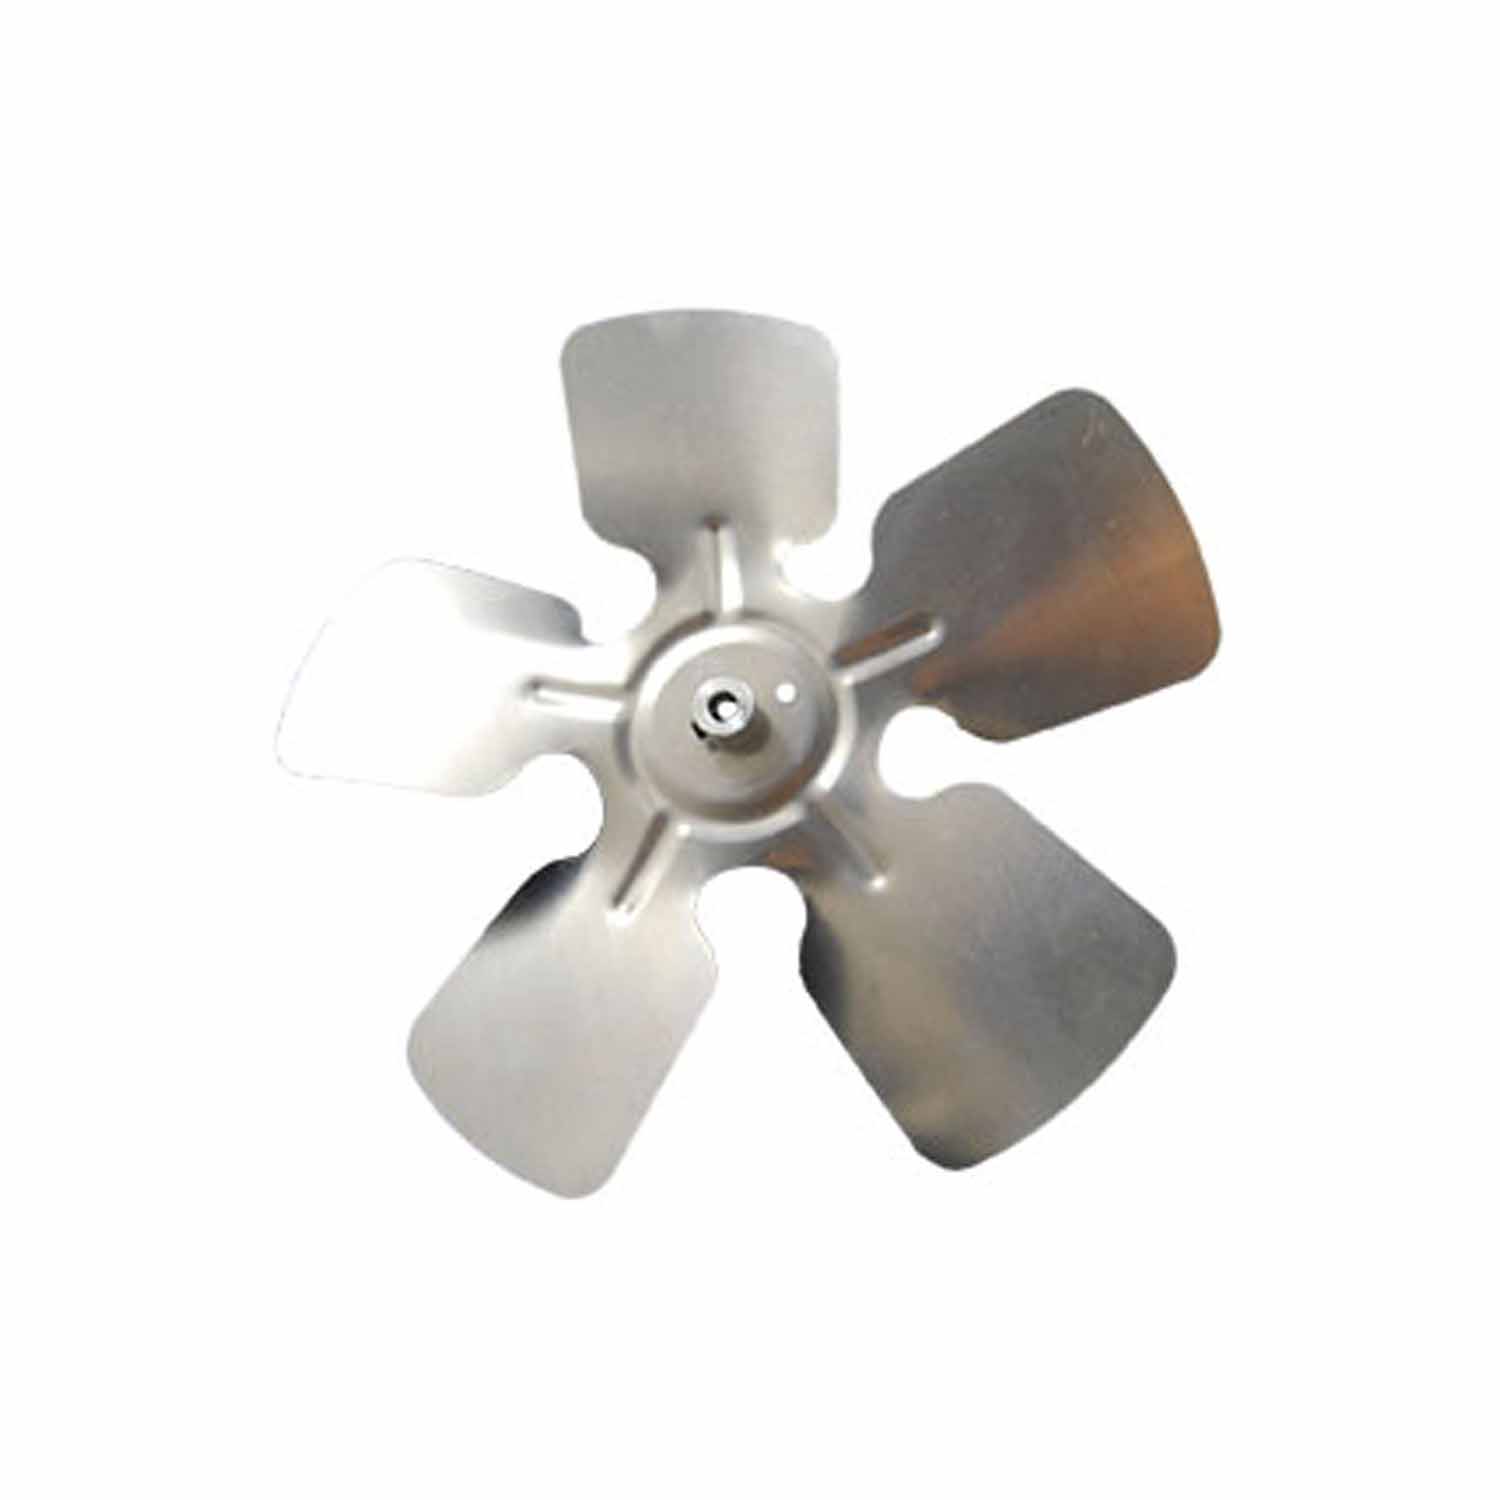 Aluminum Fan Blade, 5 Blade, 5-1/2" Dia, CW, 5/16" Bore, Hub on Intake